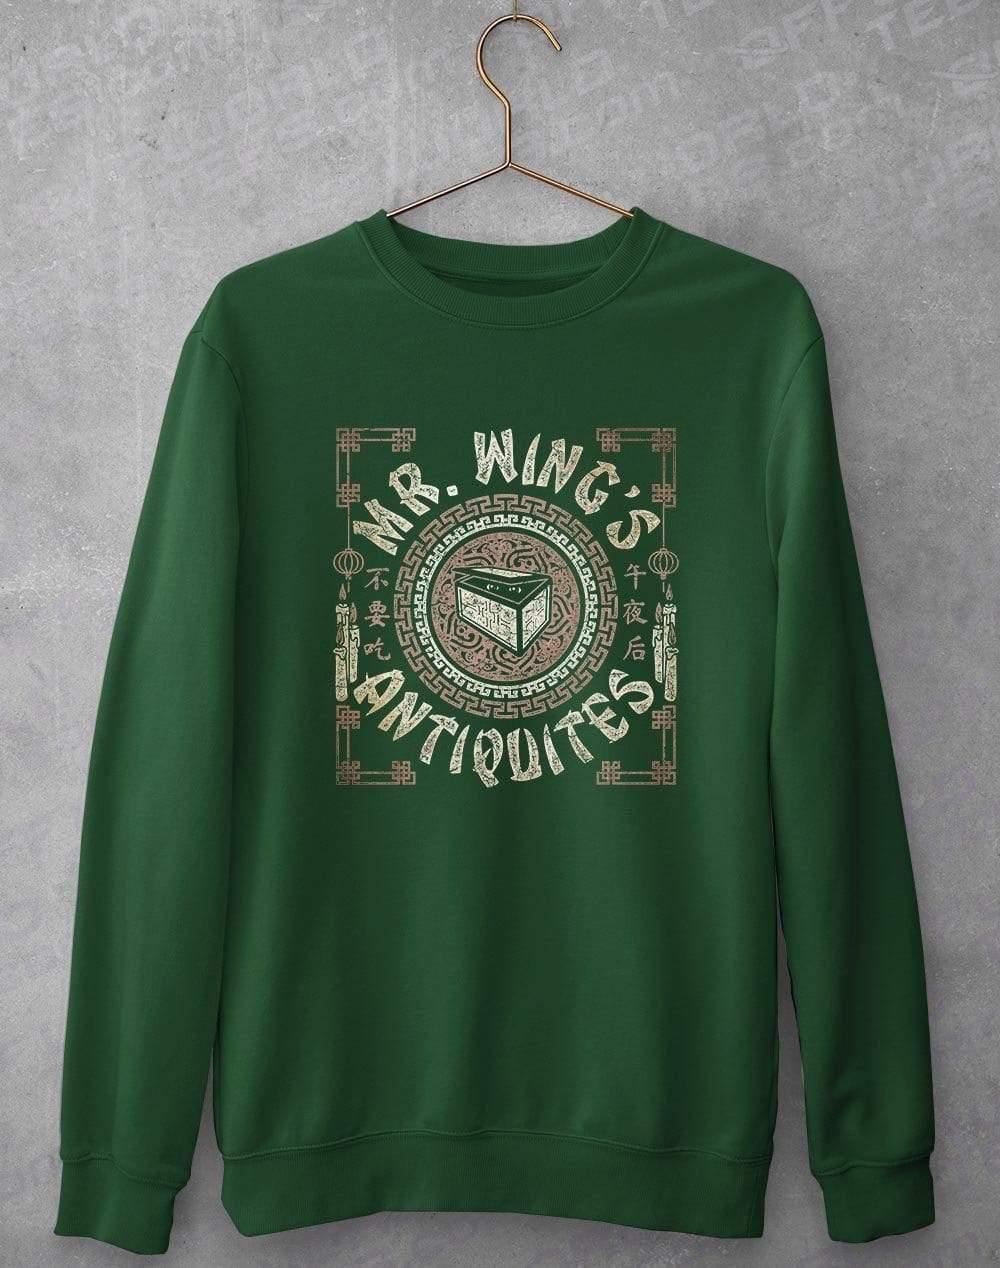 Mr Wings Antiquites Sweatshirt S / Bottle  - Off World Tees